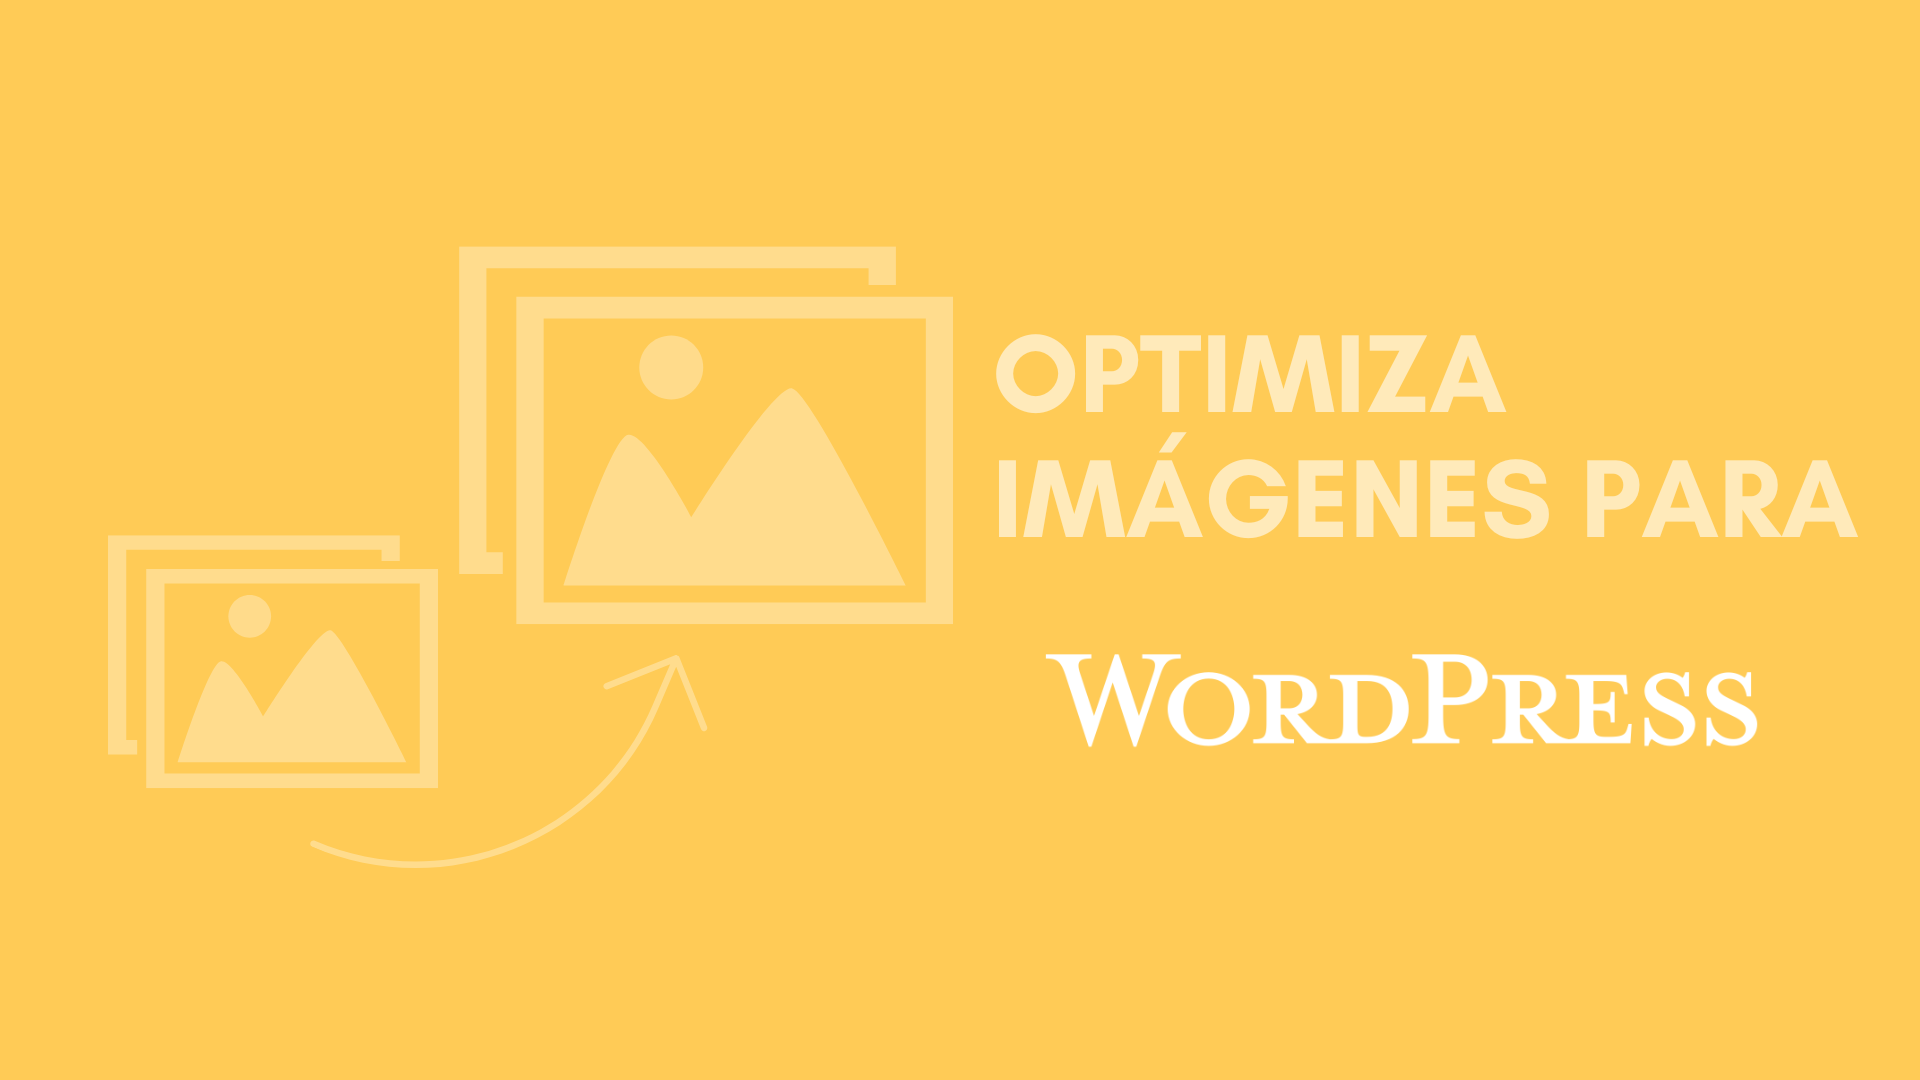 Optimiza imagenes para Wordpress